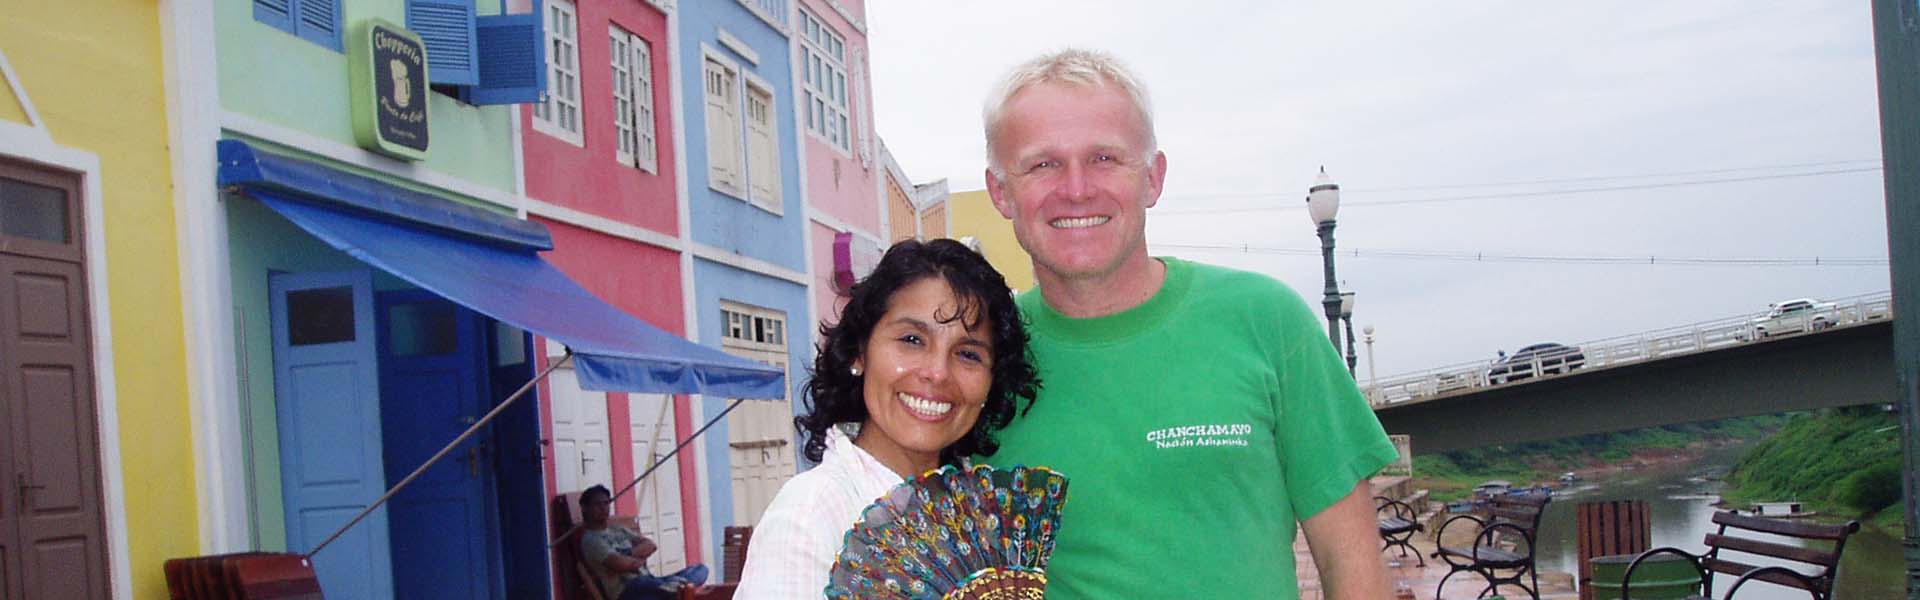 Coex Amazon - Laura & Øyvind - Tailor-made journeys off the beaten track in Peru